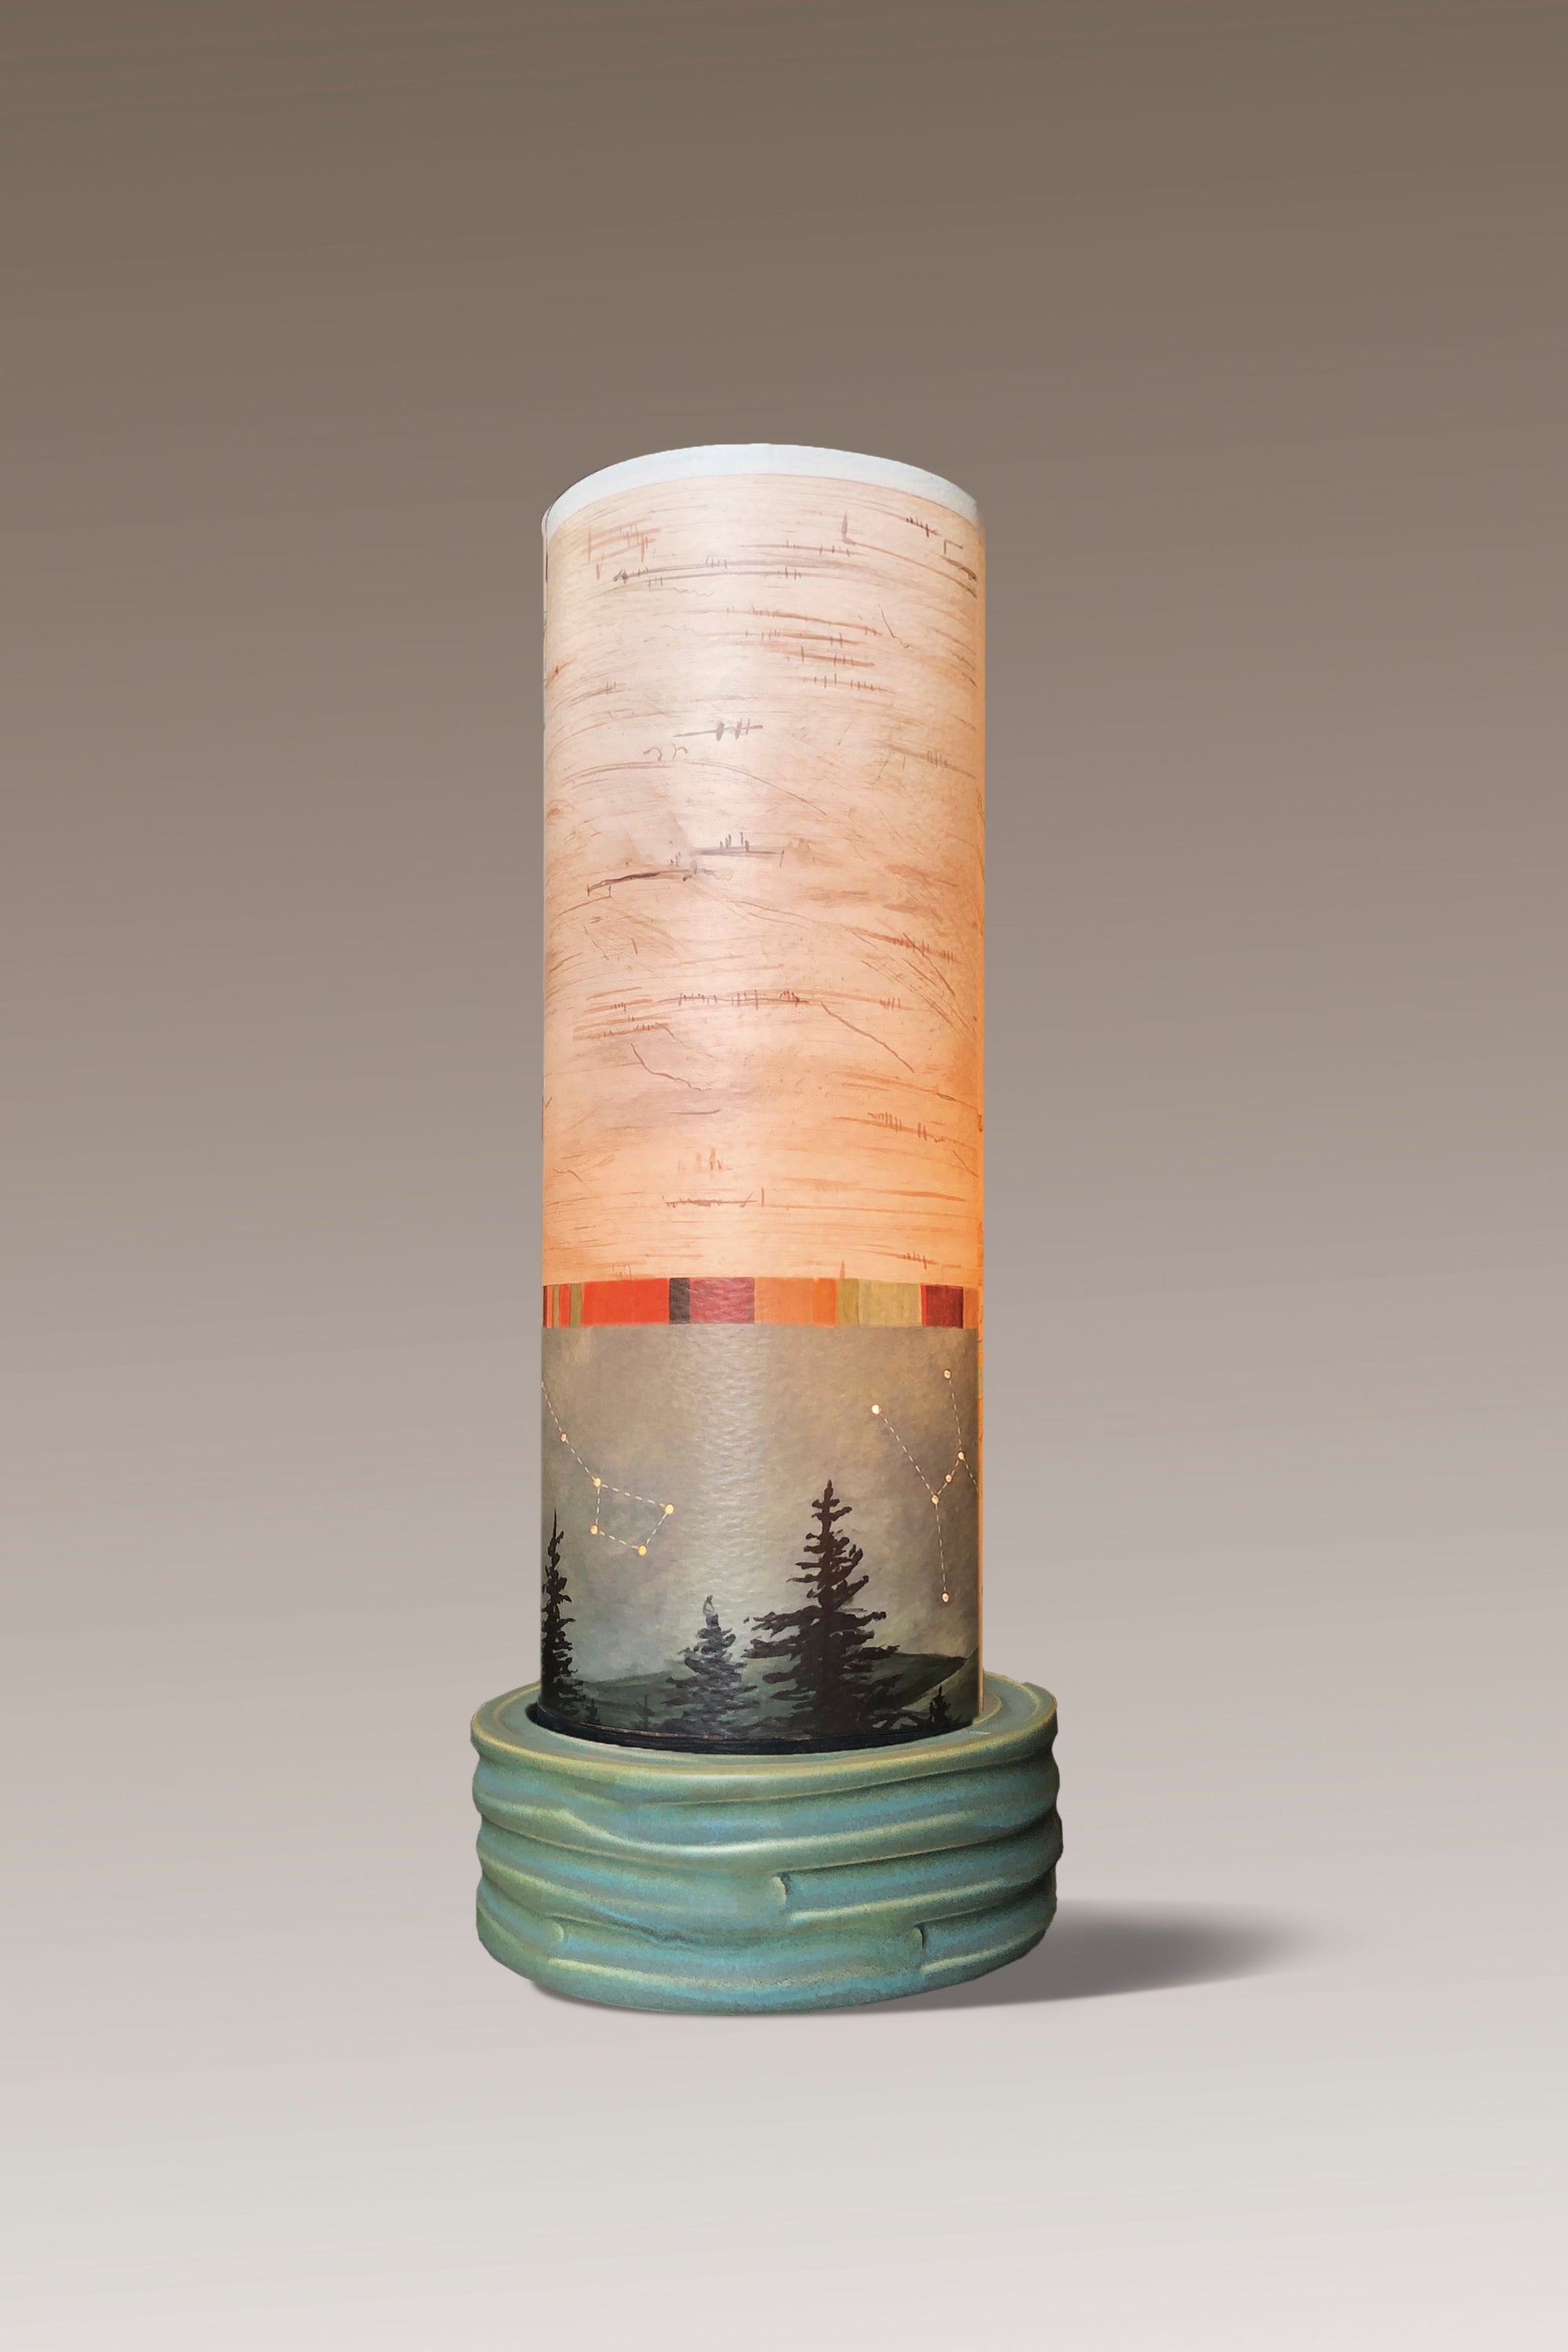 Janna Ugone & Co Luminaires Ceramic Luminaire Accent Lamp with Birch Midnight Shade